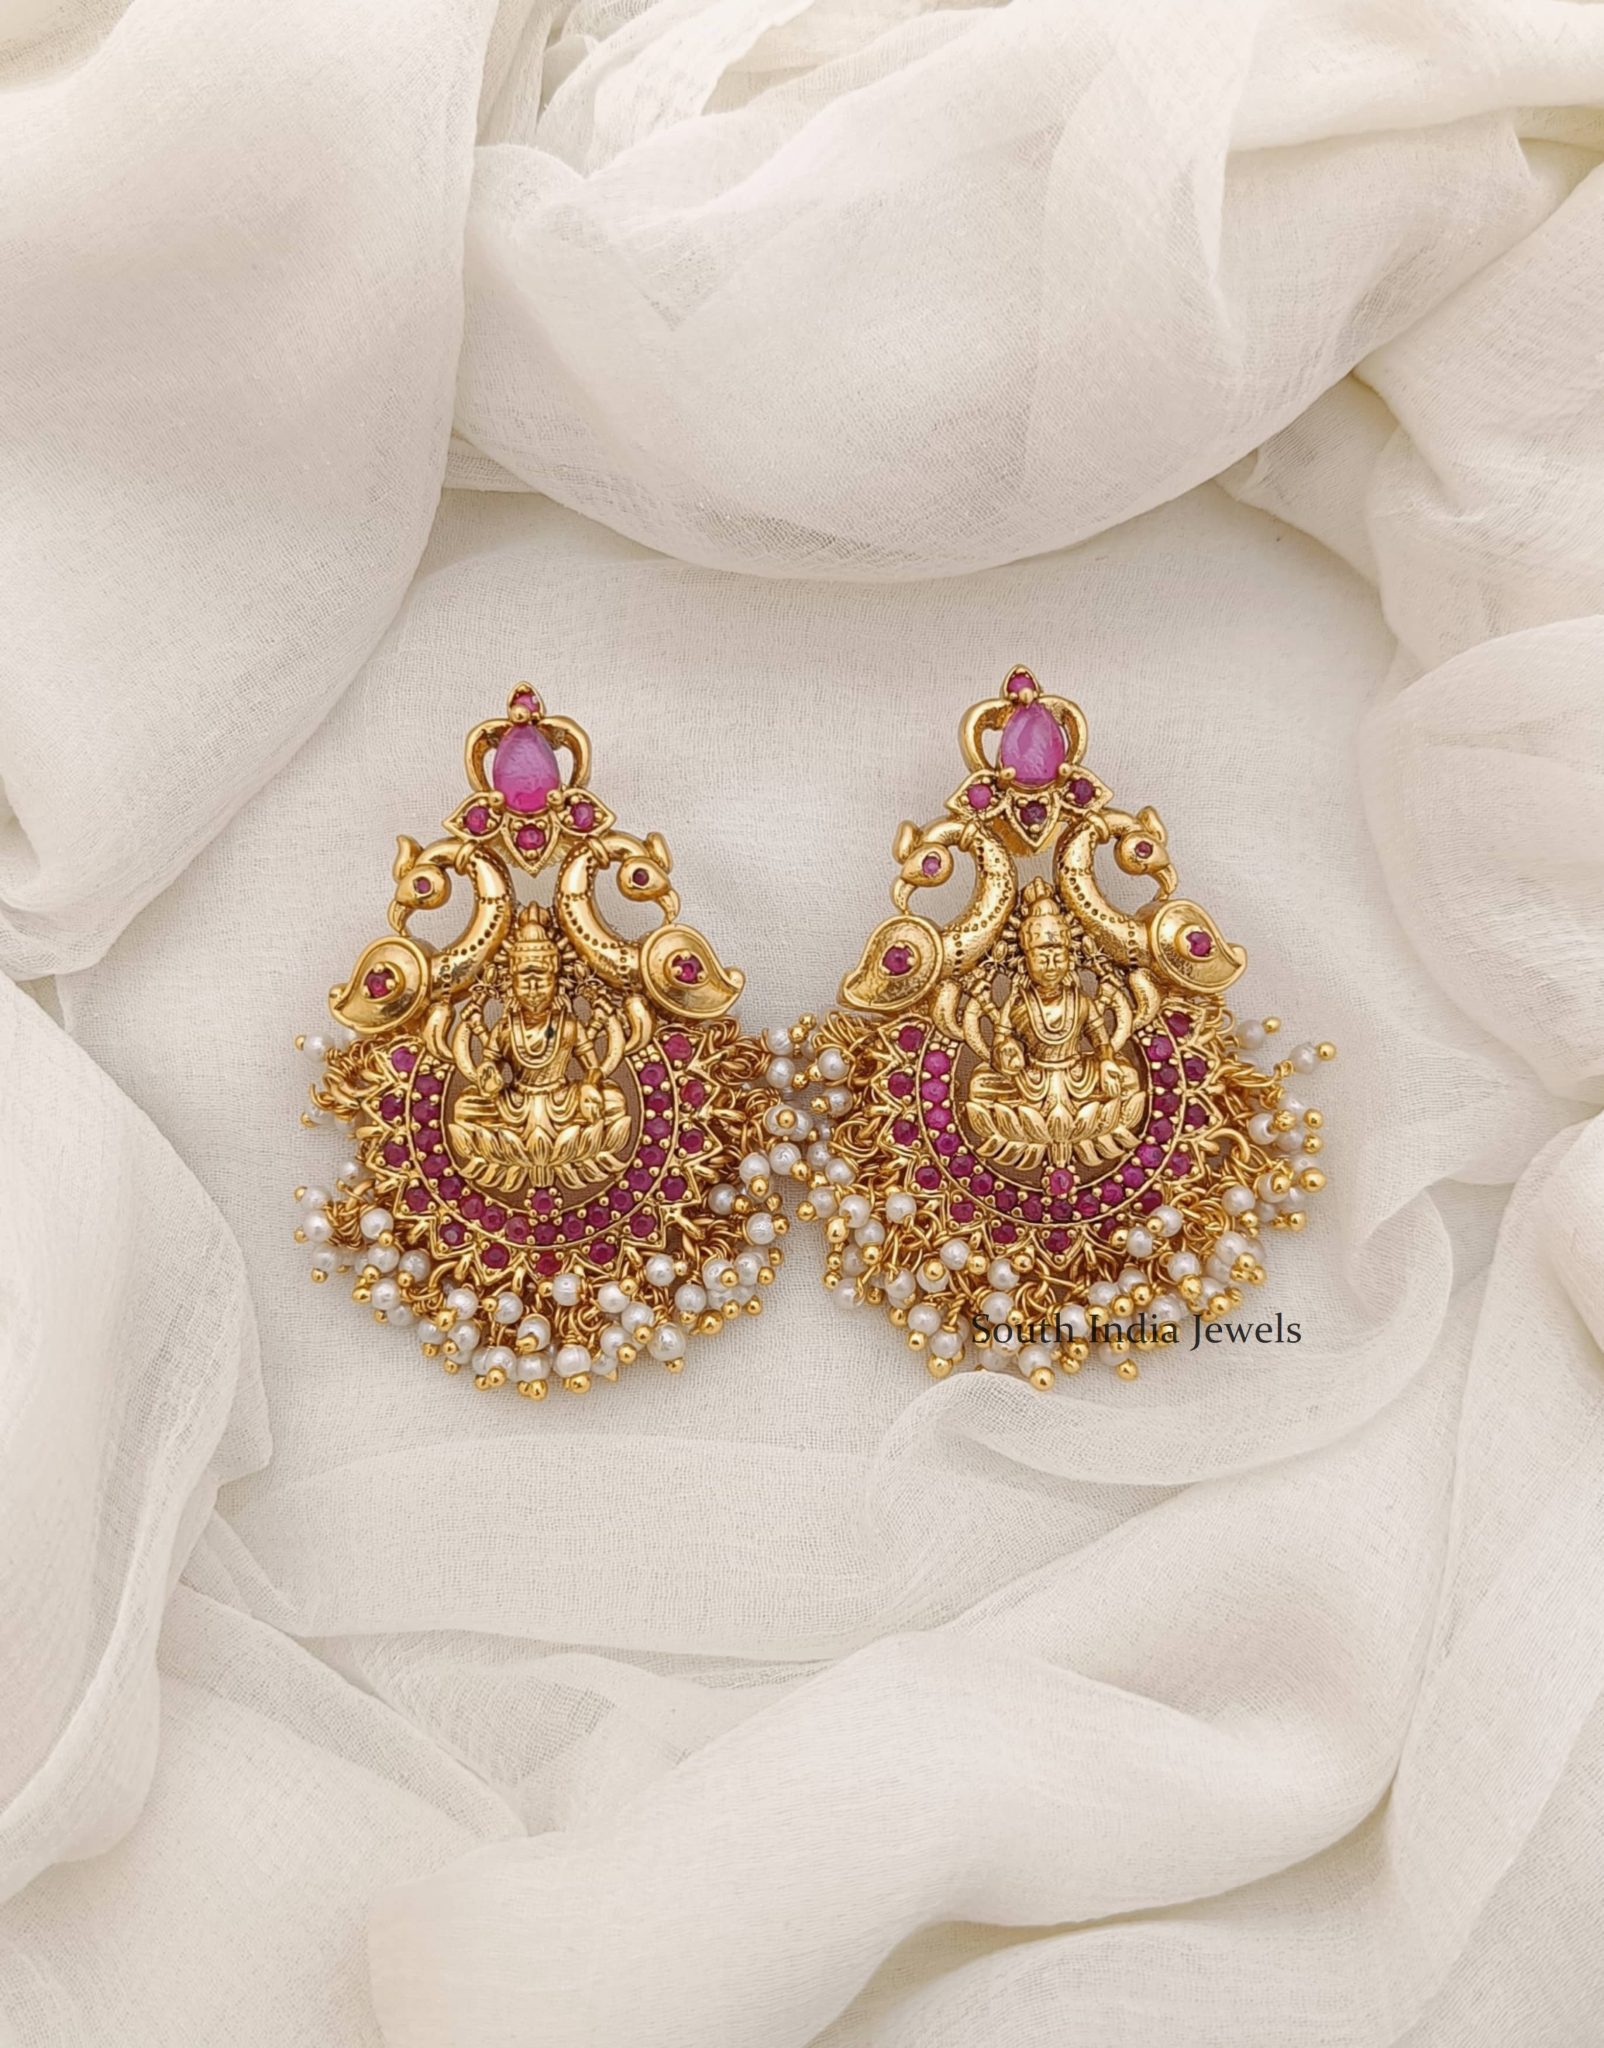 Lakshmi & Peacock Design Earrings- South India Jewels- Online Shop